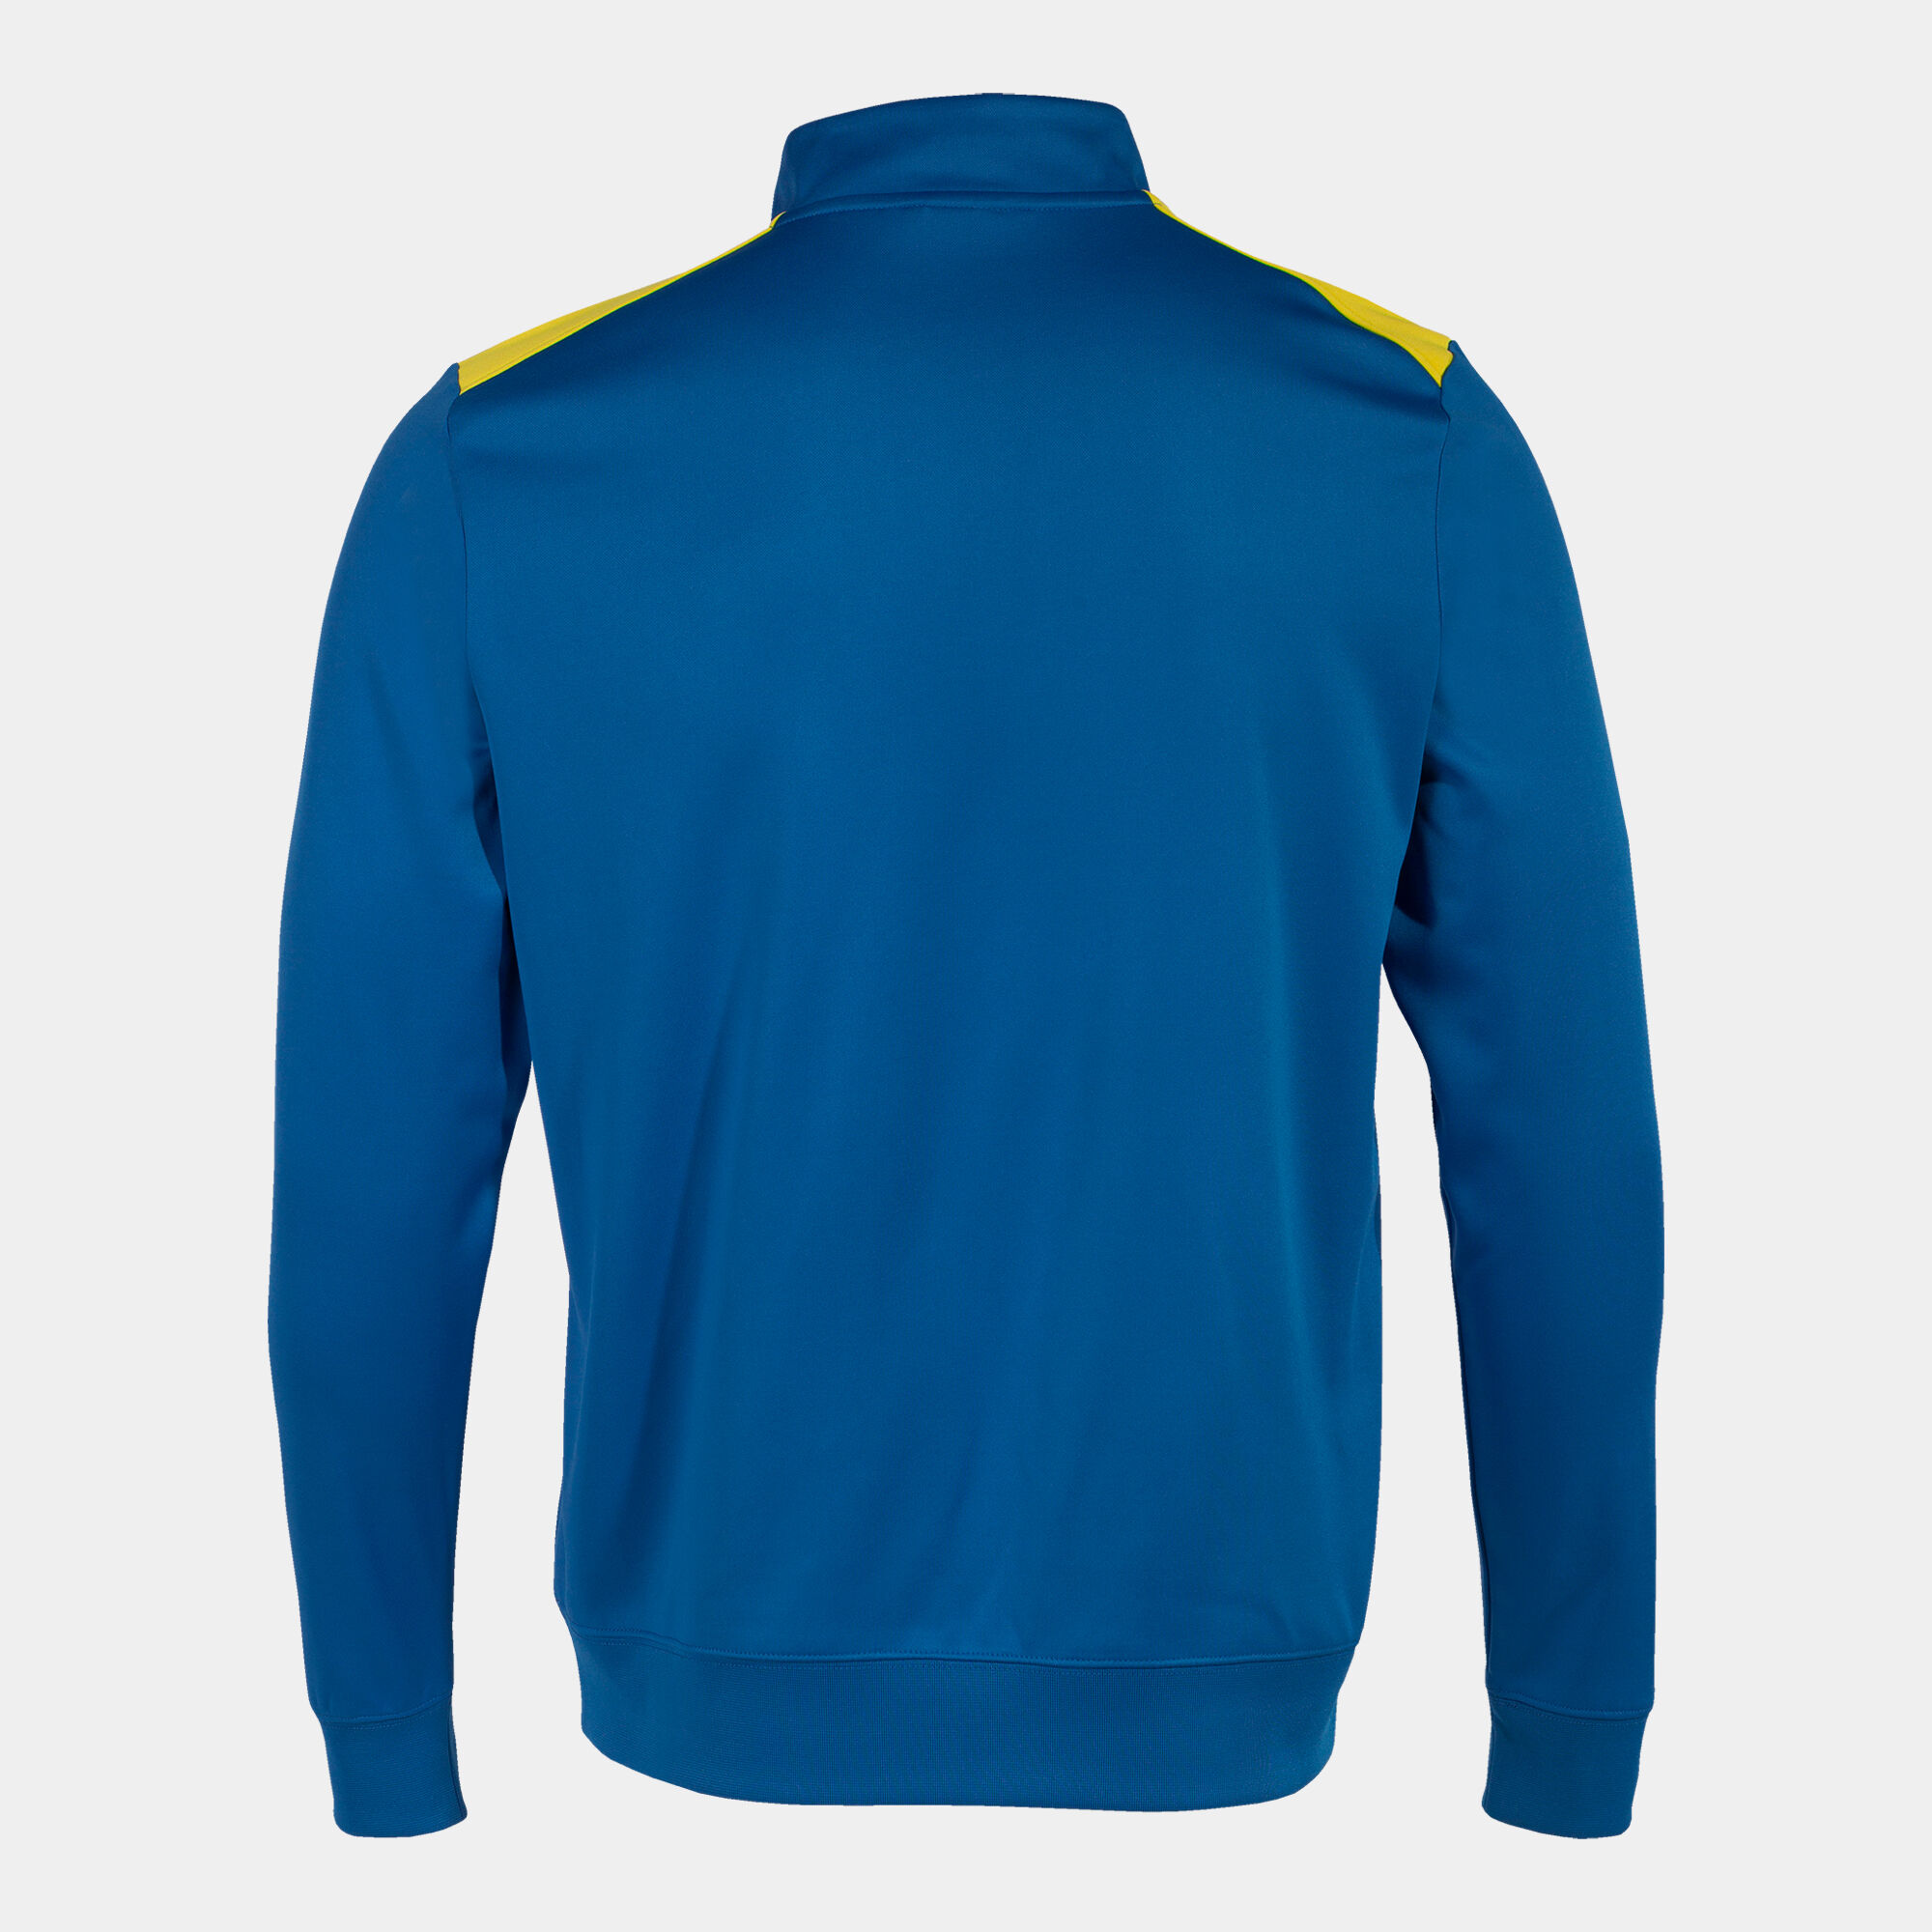 Sweatshirt man Championship VII royal blue yellow